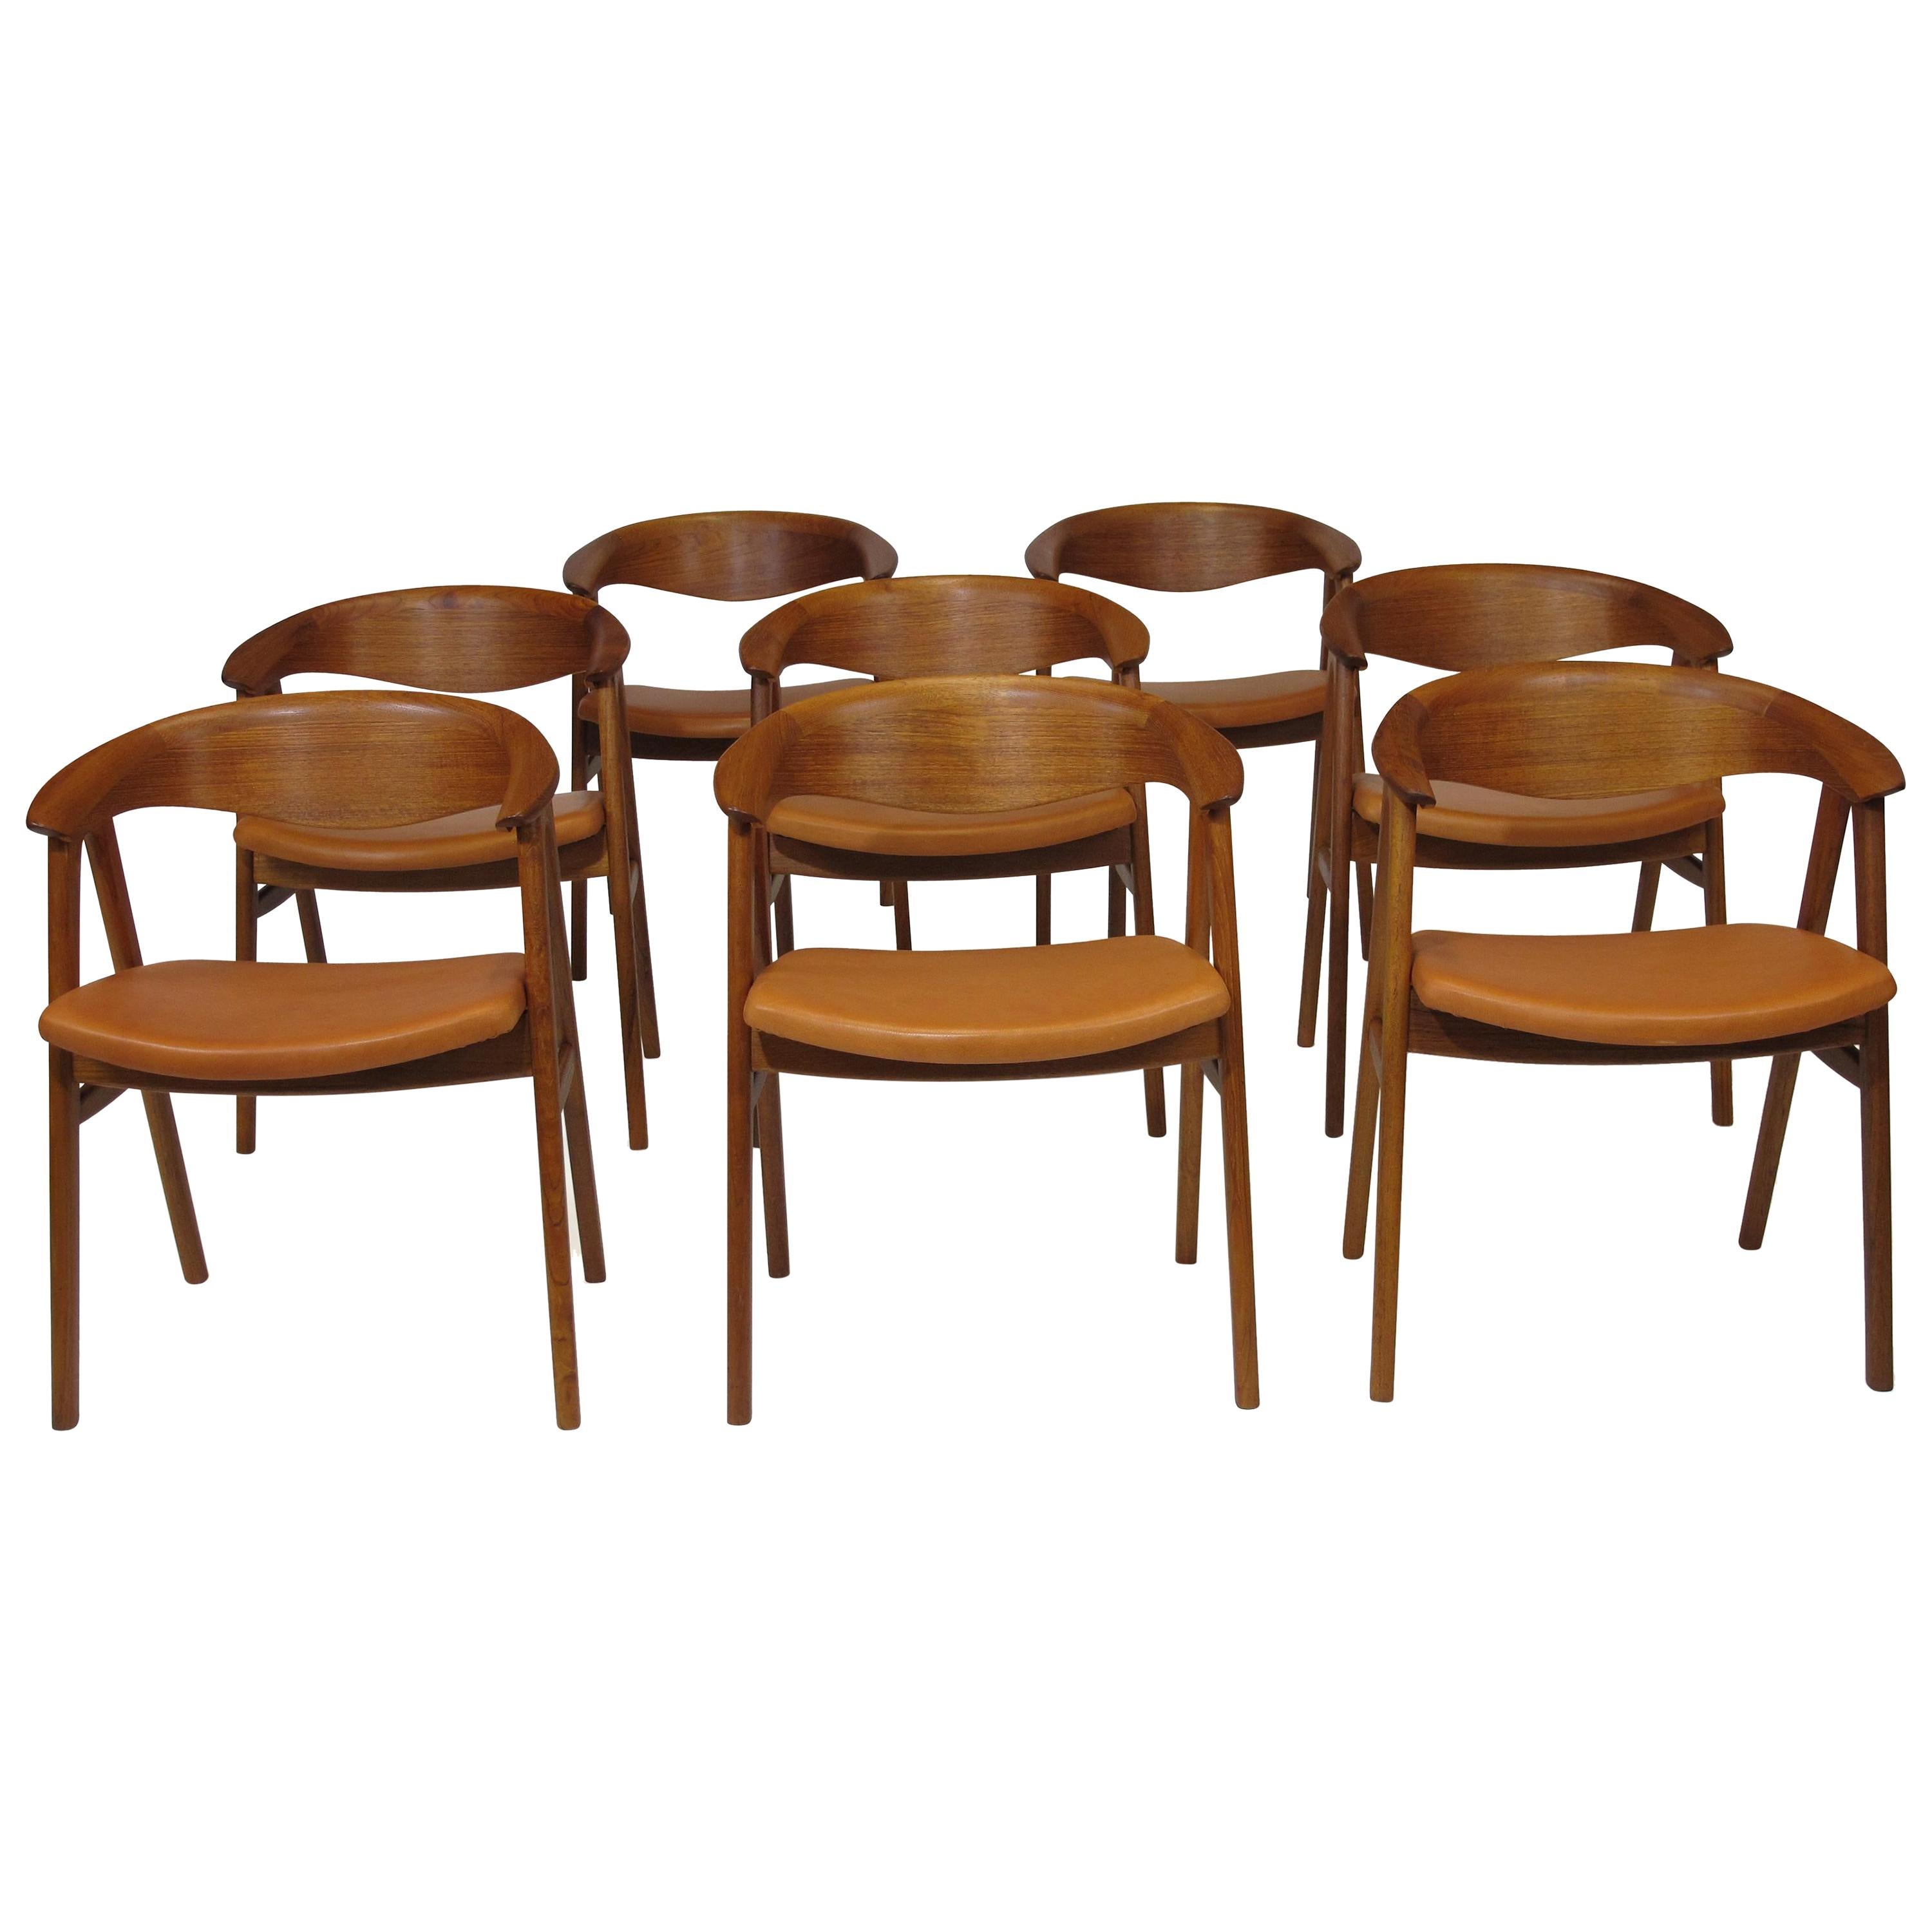 Erik Kirkegaard Danish Teak Dining Chairs in Saddle Leather